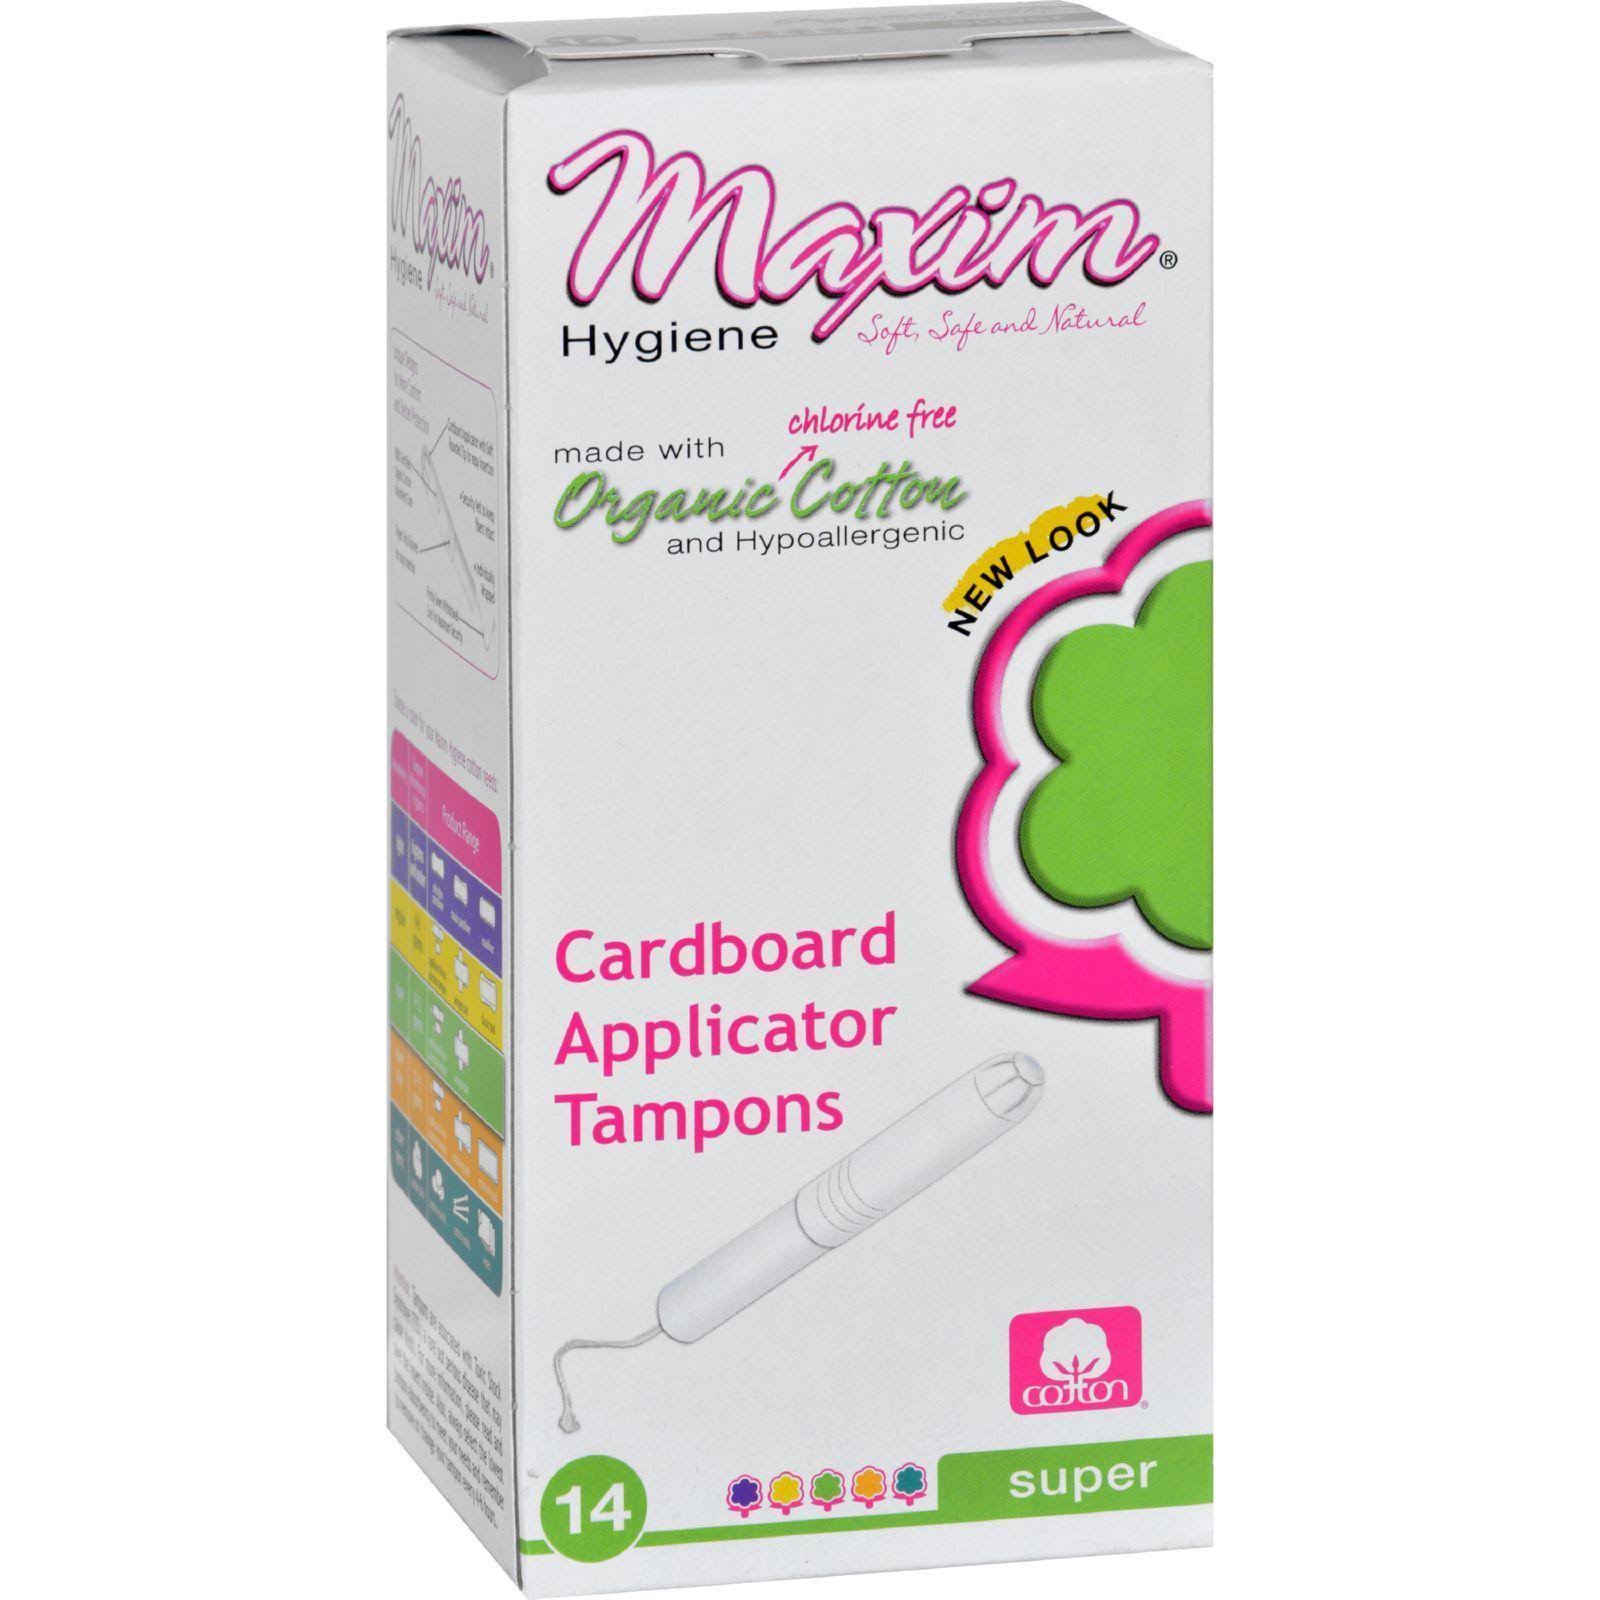 Maxim Hygiene Organic Cotton Tampons - Super, Cardboard Applicator, 14ct